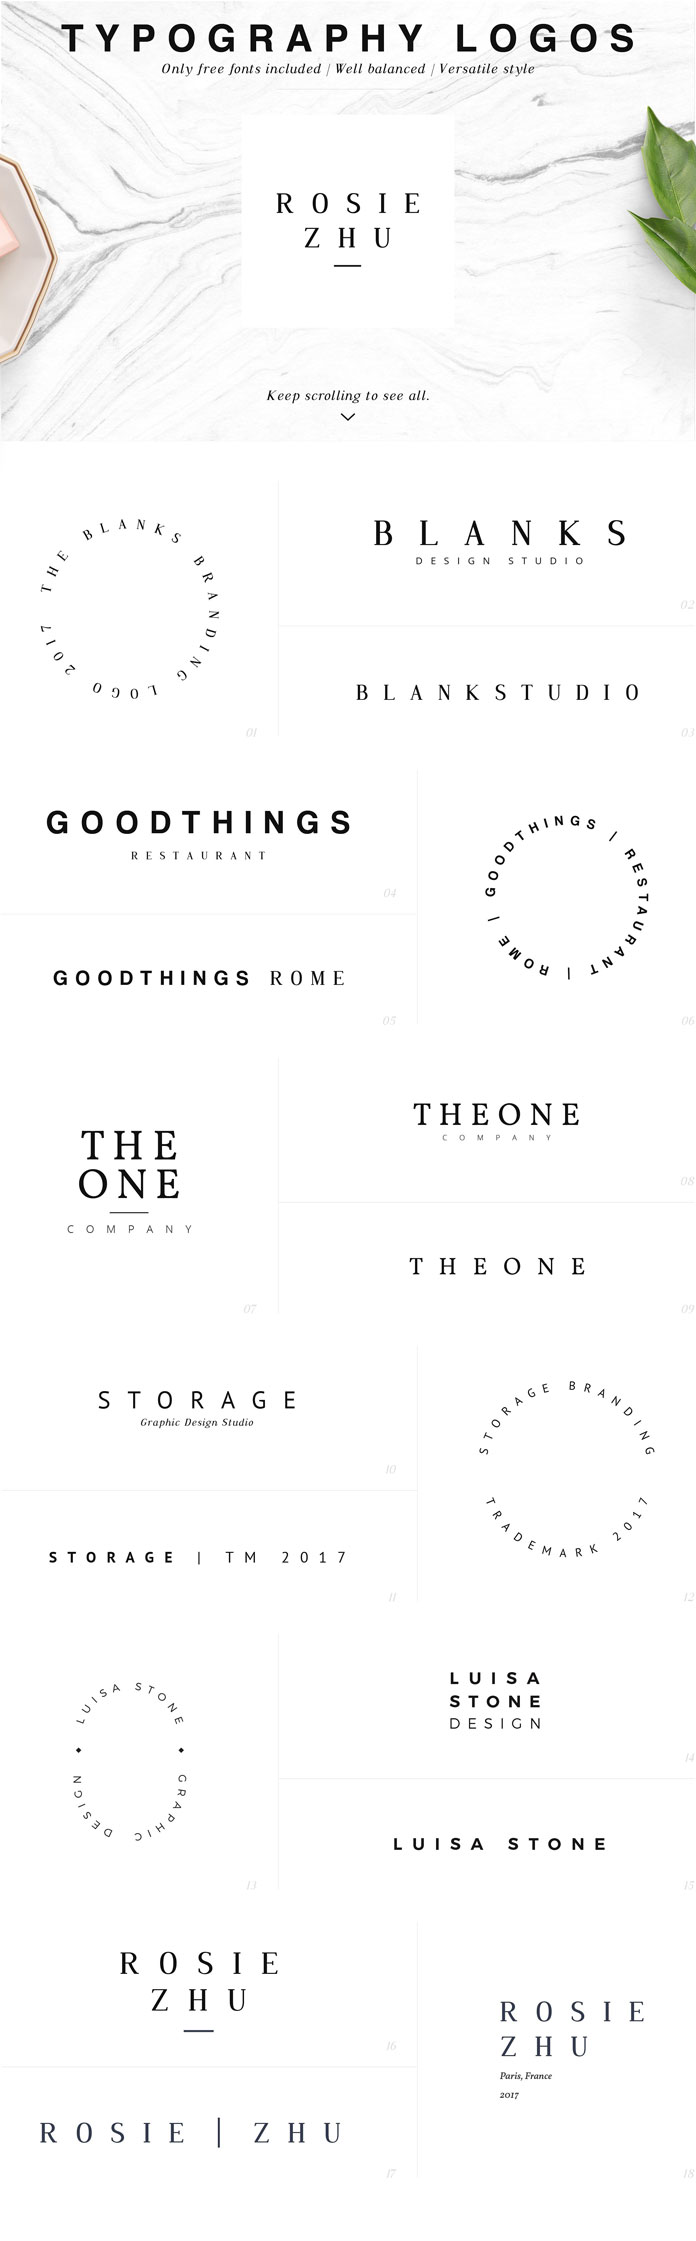 Typography logos.